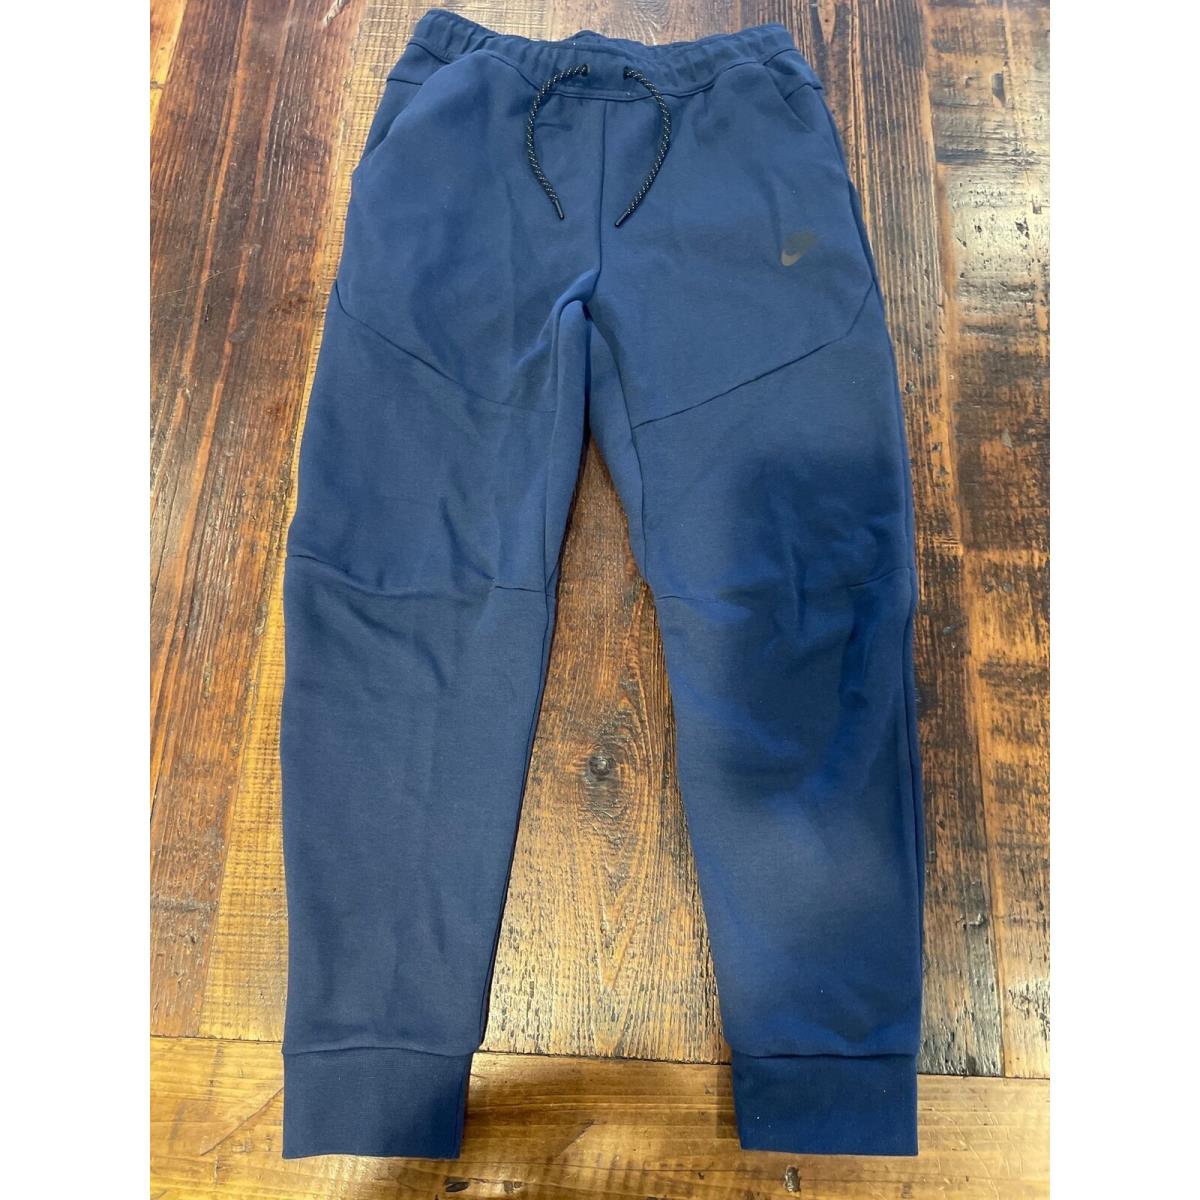 Nike Nsw Tech Fleece Jogger Pants Men`s Sizes Tapered Black Navy Blue CU4495-410